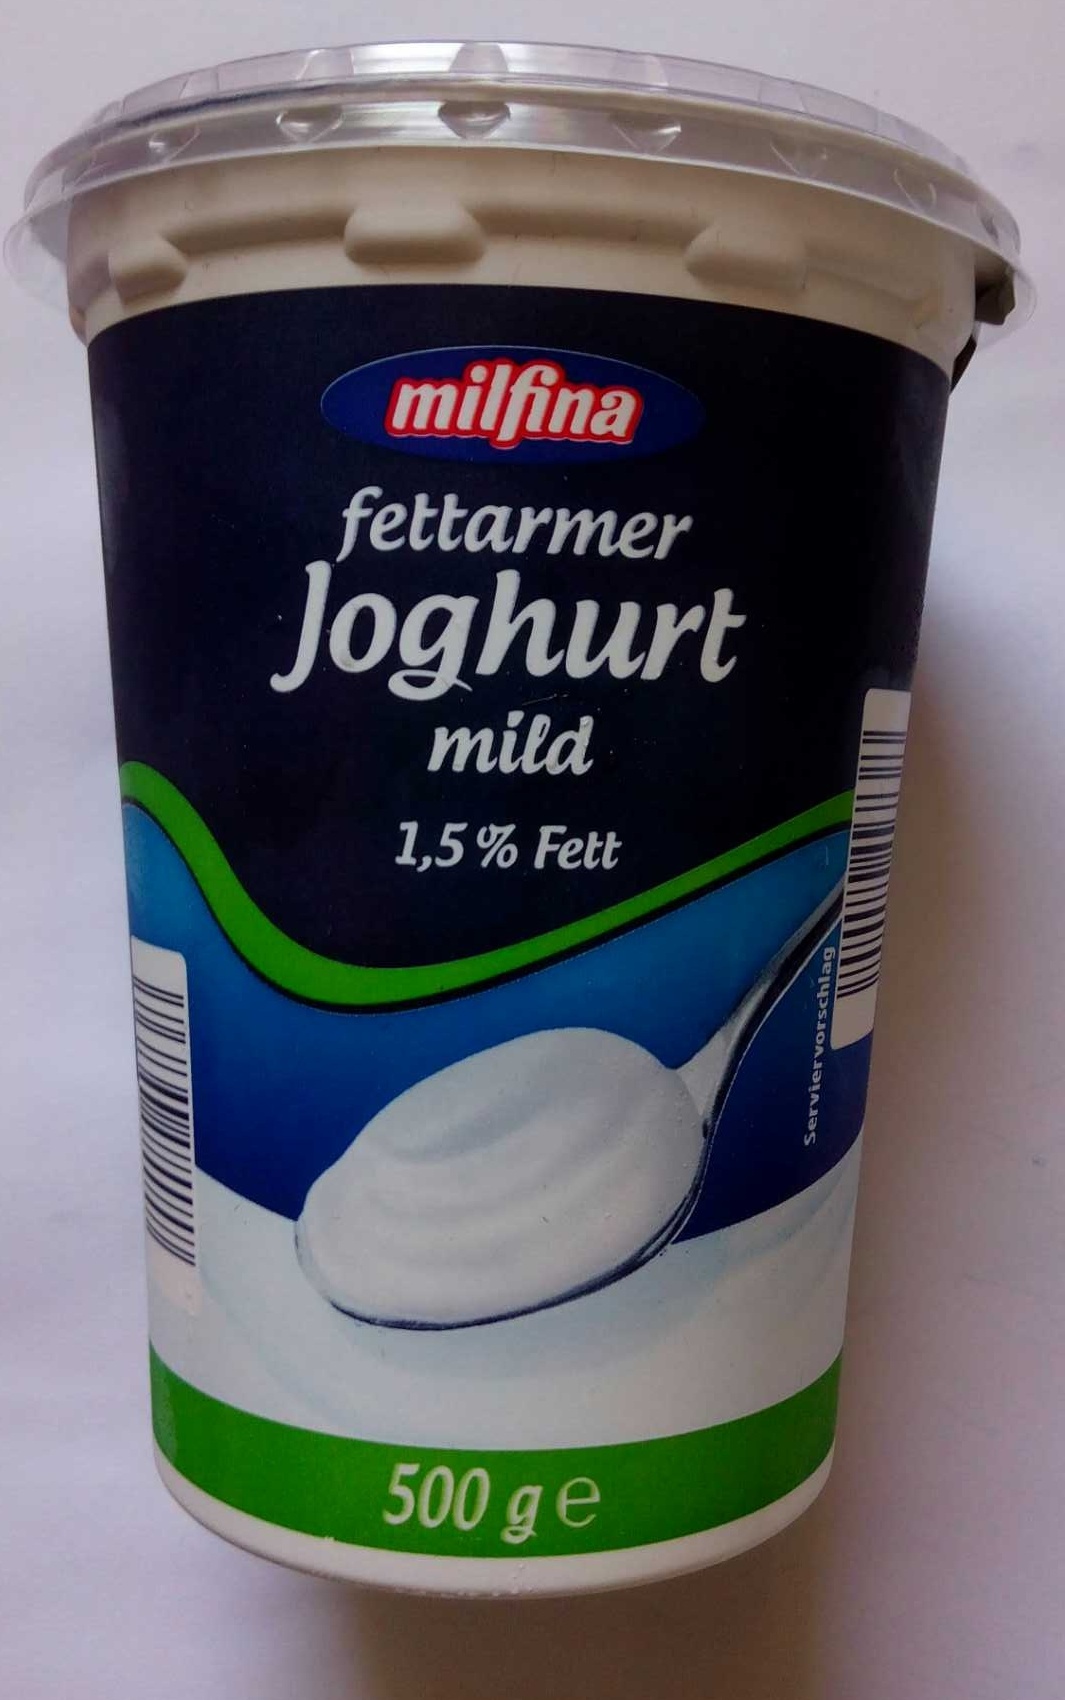 Fettarmer Joghurt mild 1,5% Fett - Produkt - de